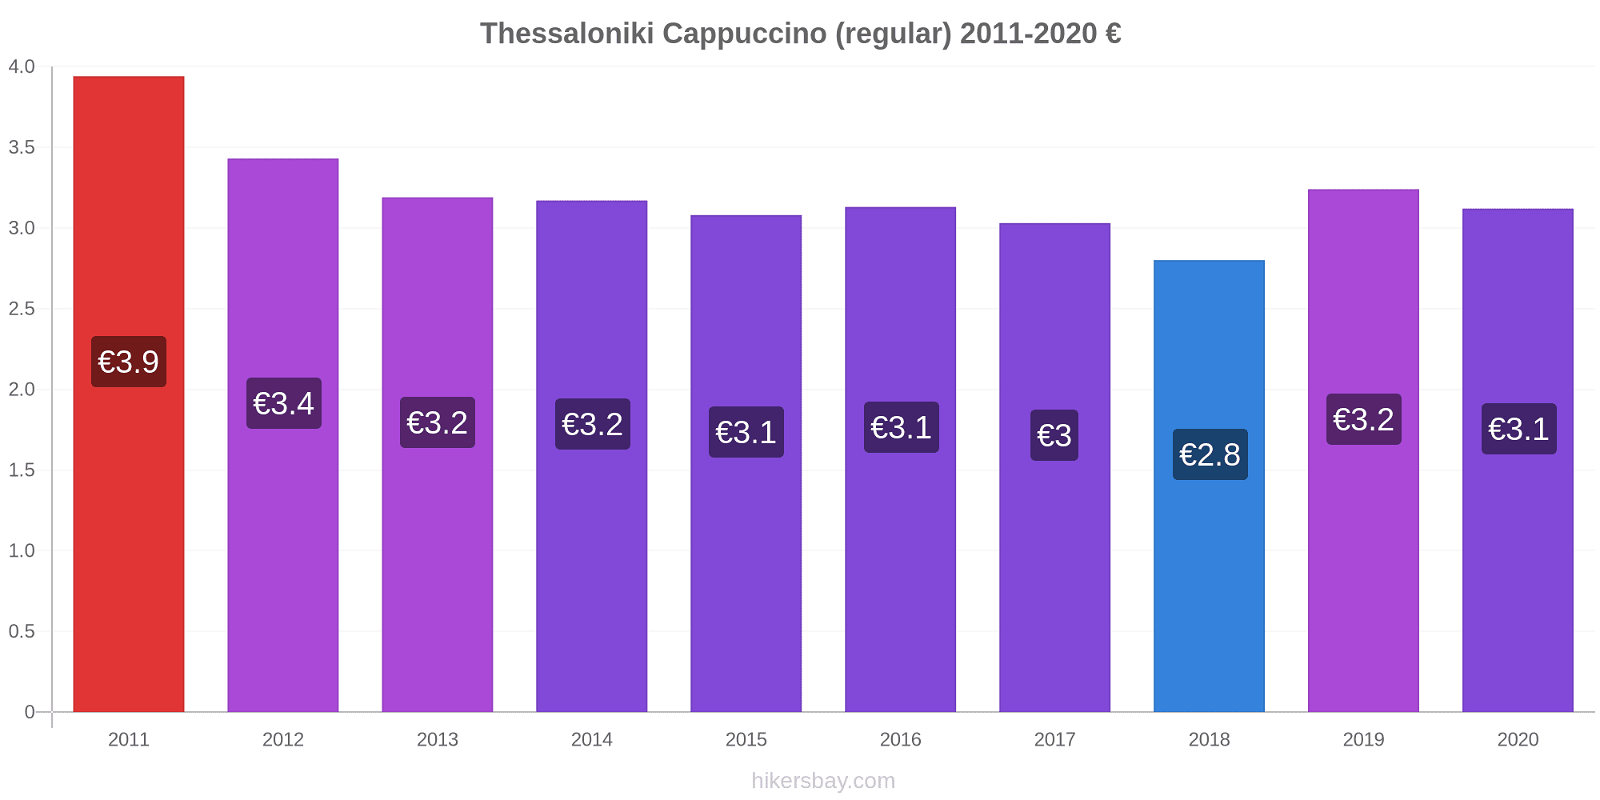 Thessaloniki price changes Cappuccino (regular) hikersbay.com